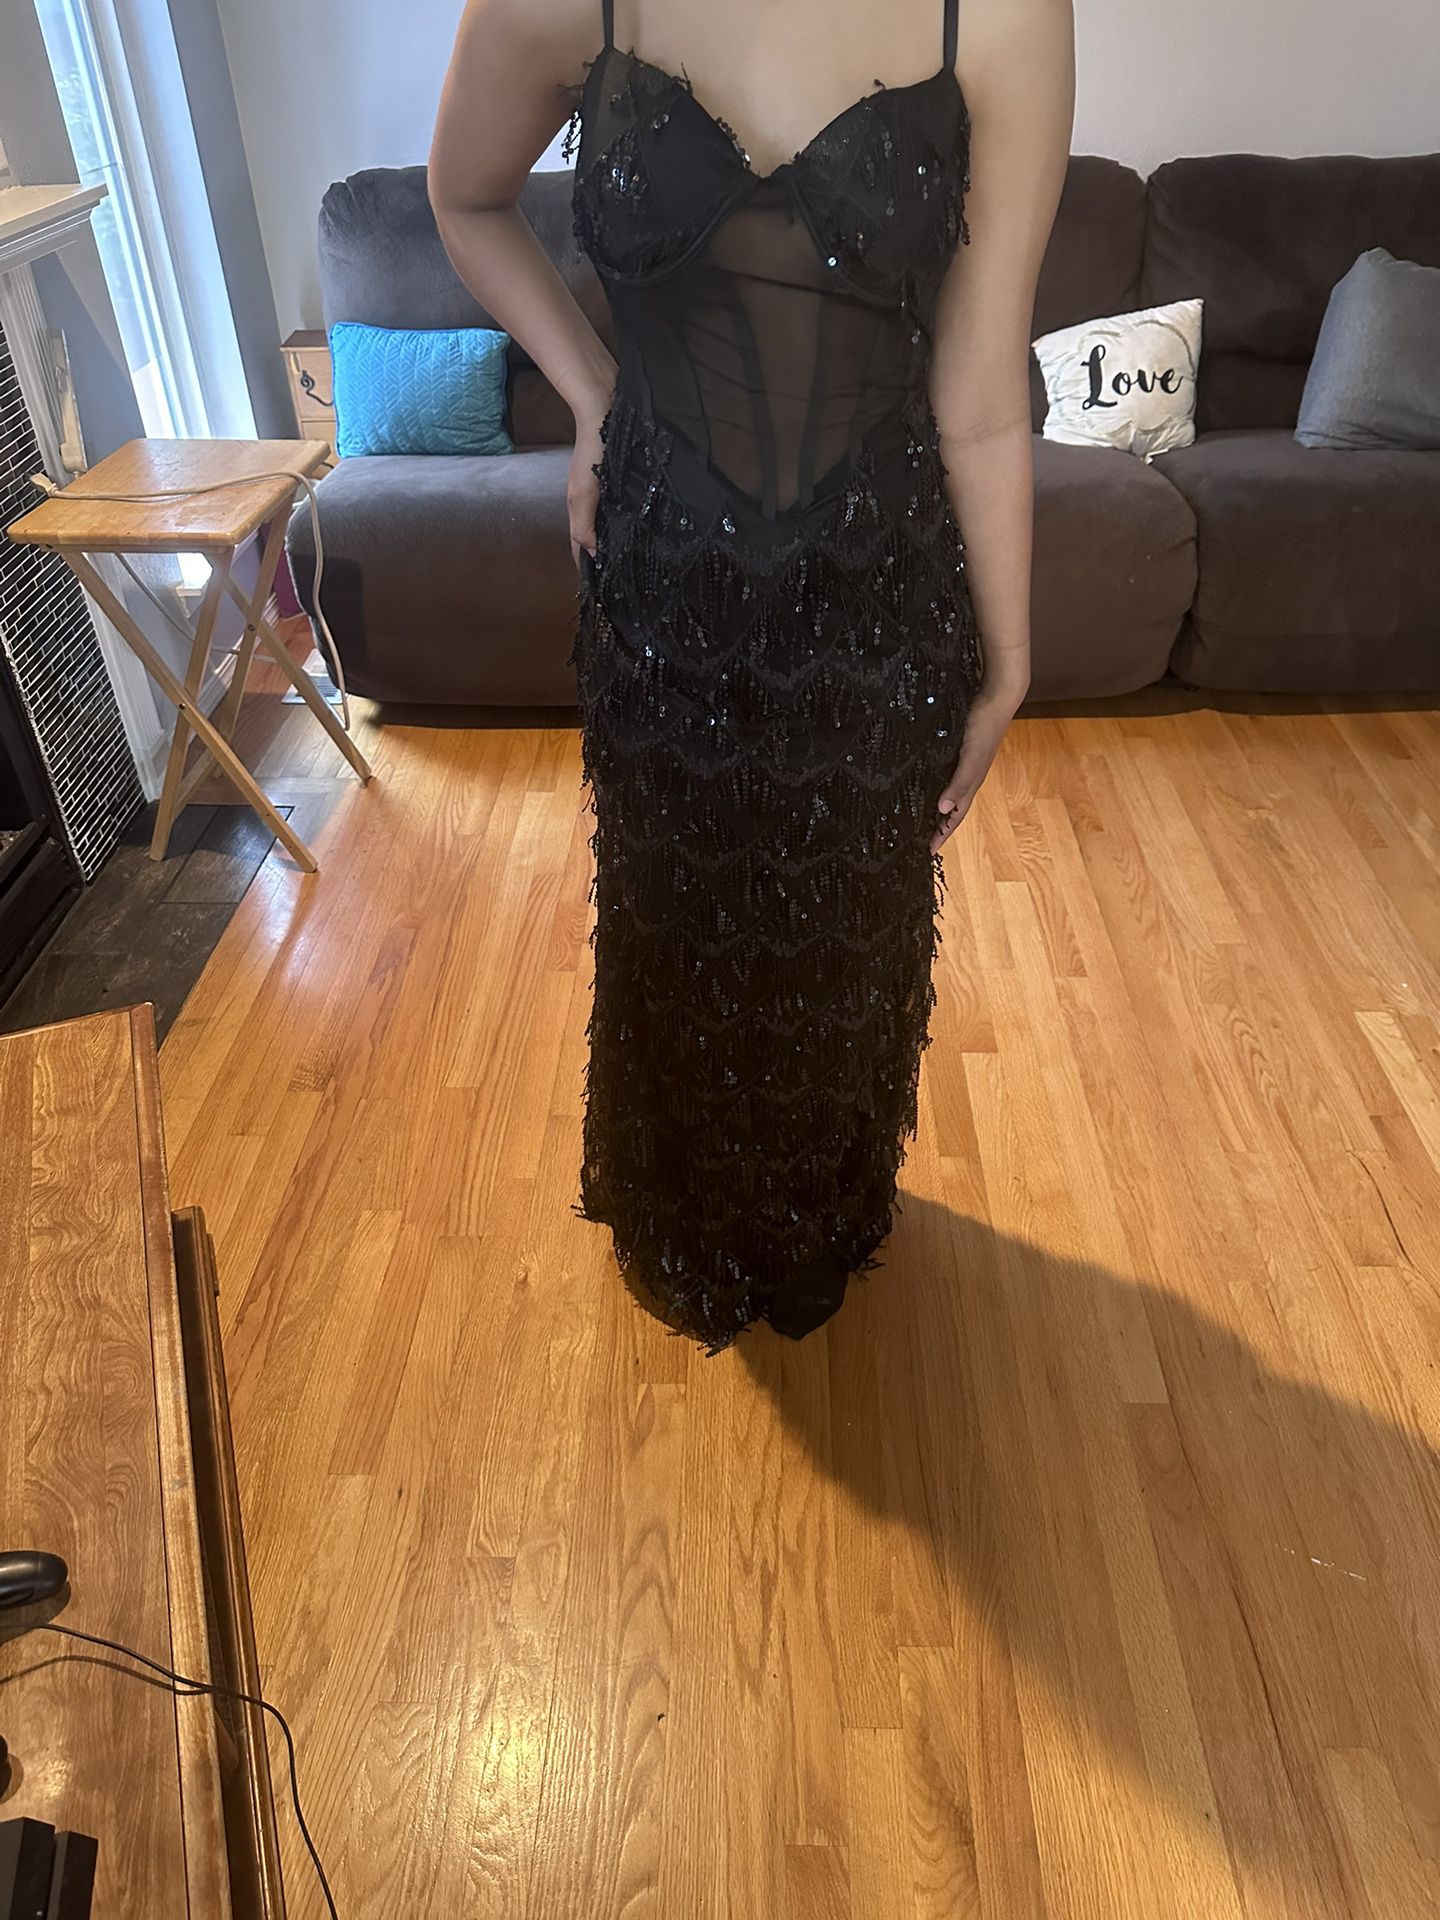 Black Sparkly Prom Dress